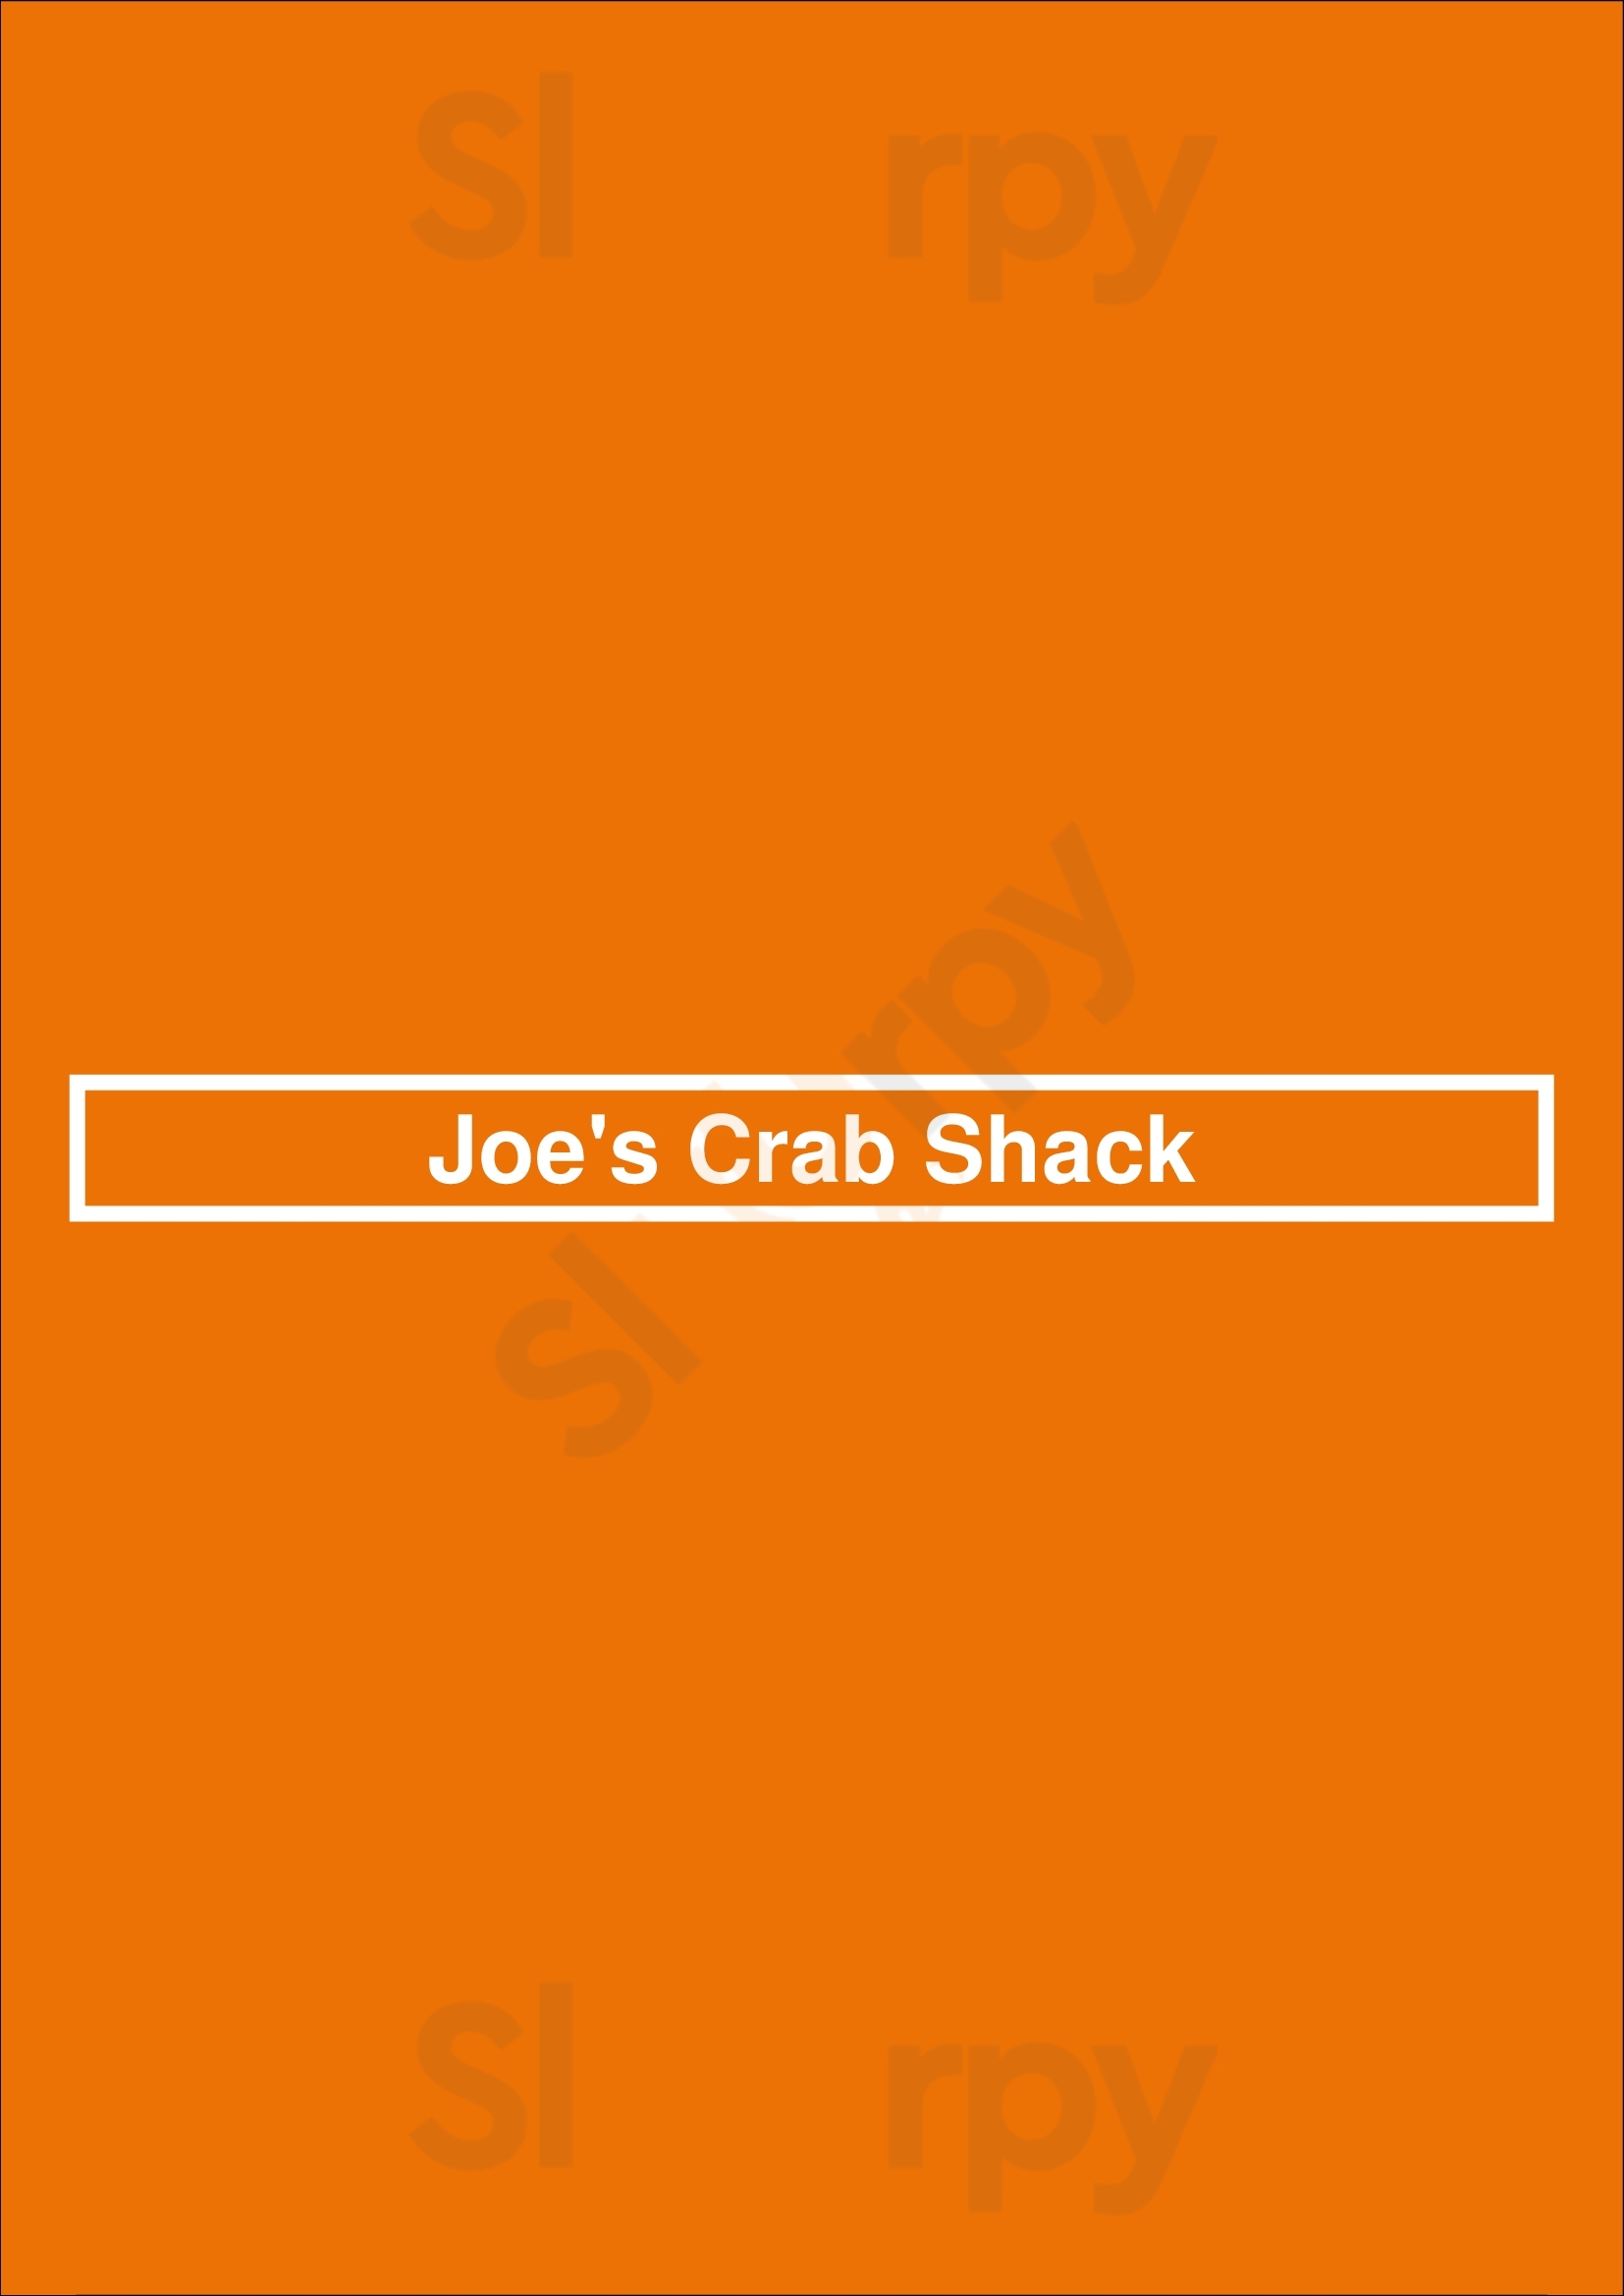 Joe's Crab Shack Boise Menu - 1